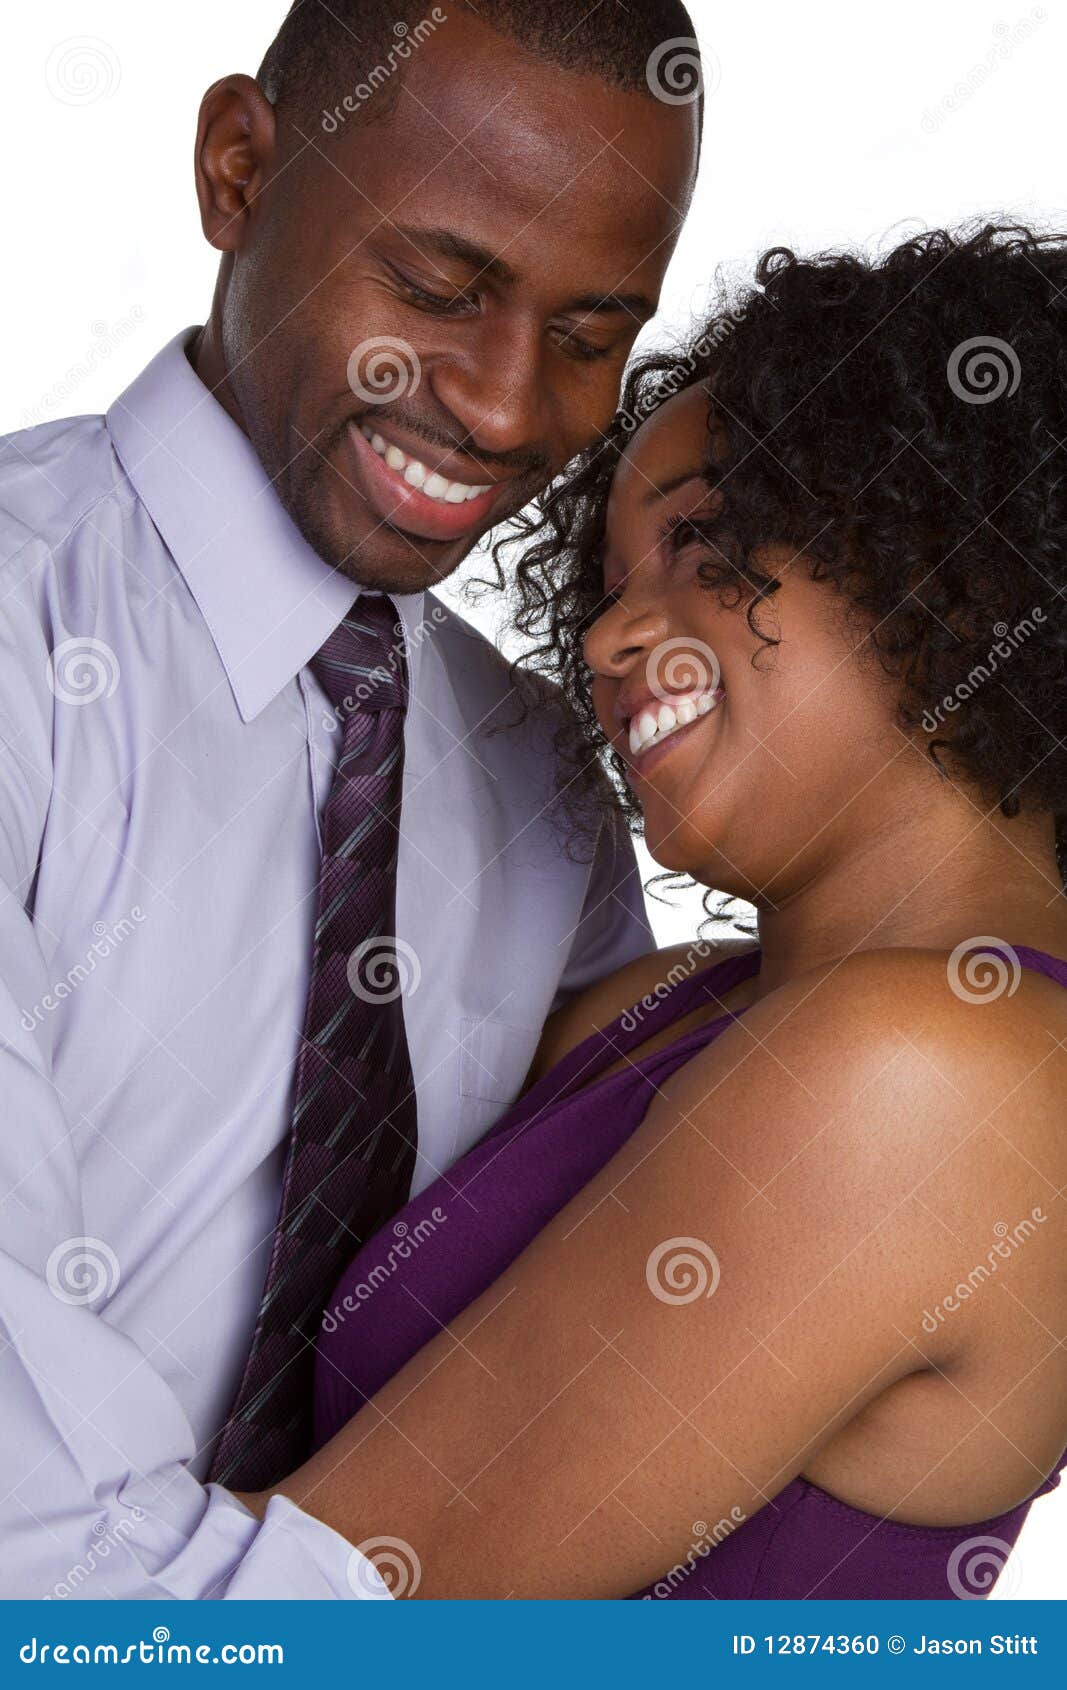 https://thumbs.dreamstime.com/z/happy-black-couple-12874360.jpg